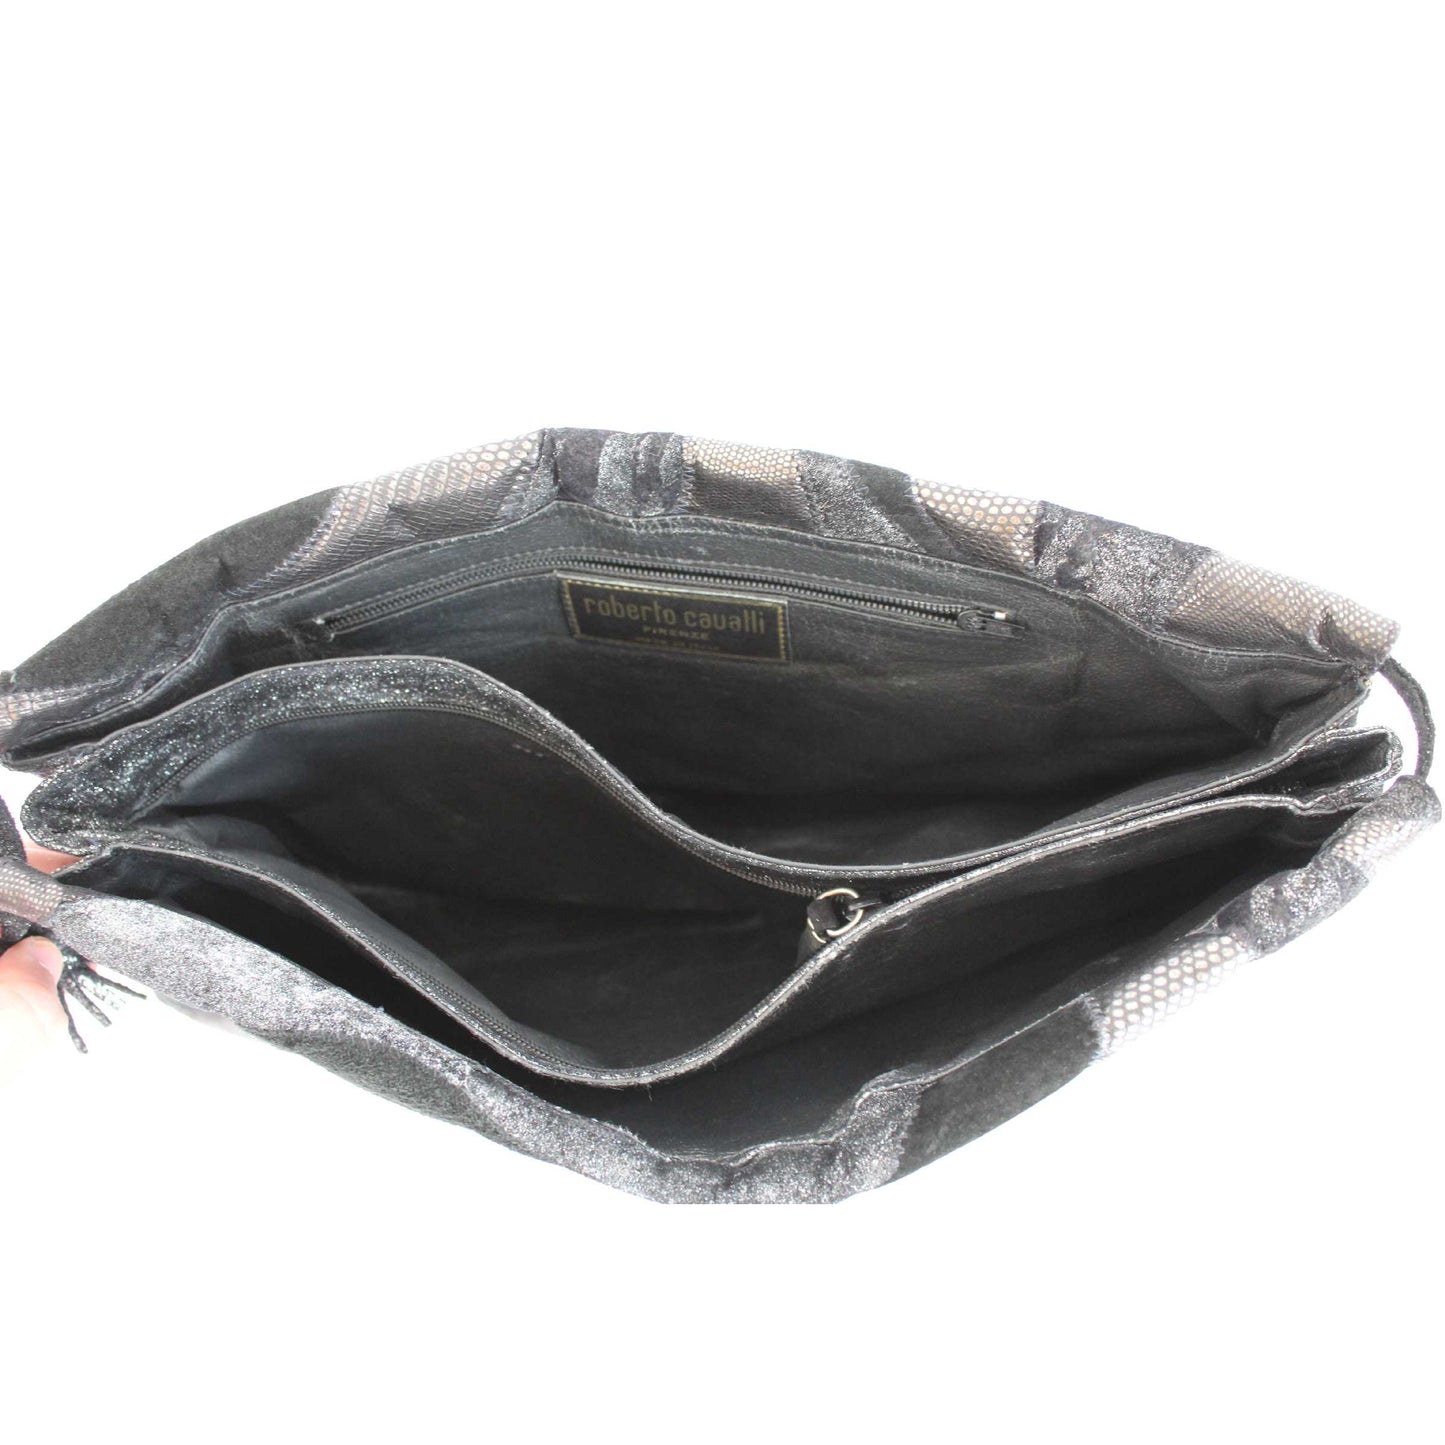 Roberto Cavalli Vintage Black Gray Leather Handbag